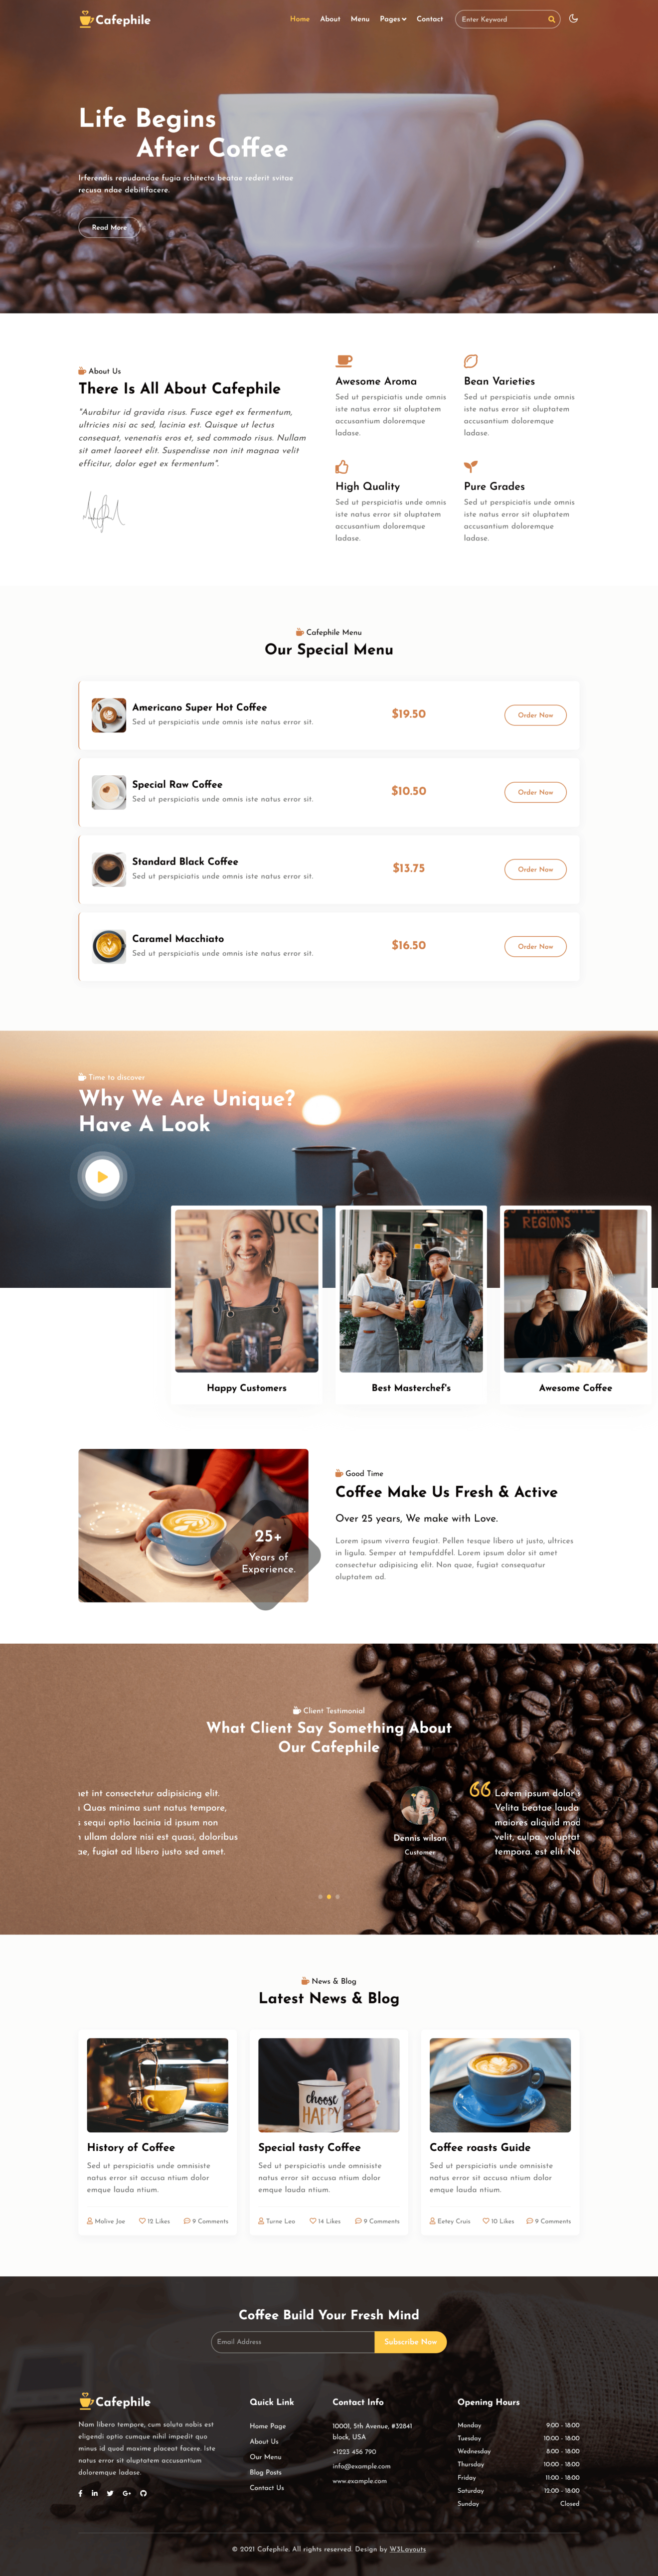 CafePhile a Coffee Shop Website Design Home Page